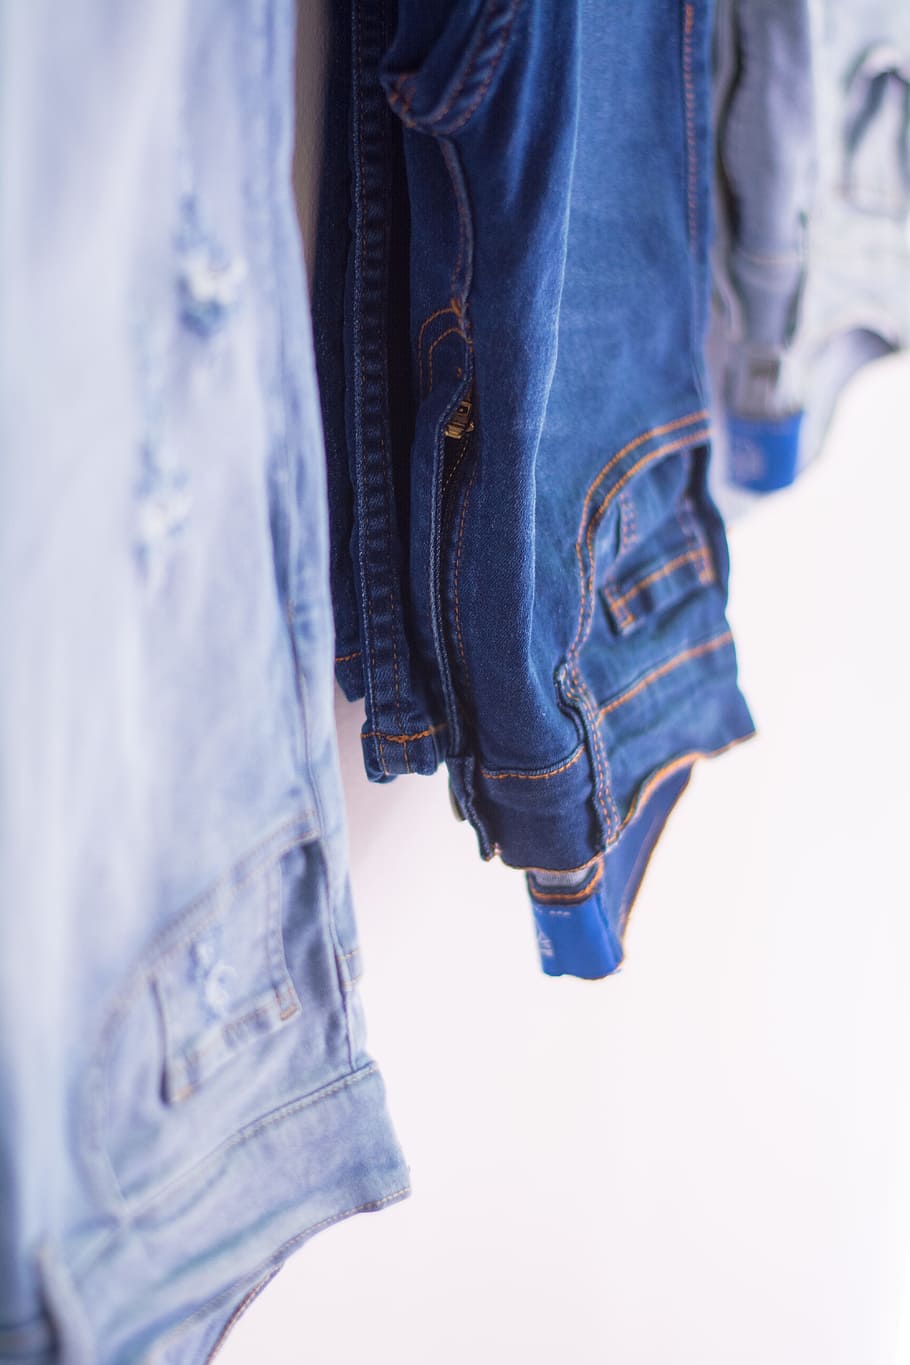 Blue Denim Bottoms, apparel, blue jeans, casual, clothes, clothing